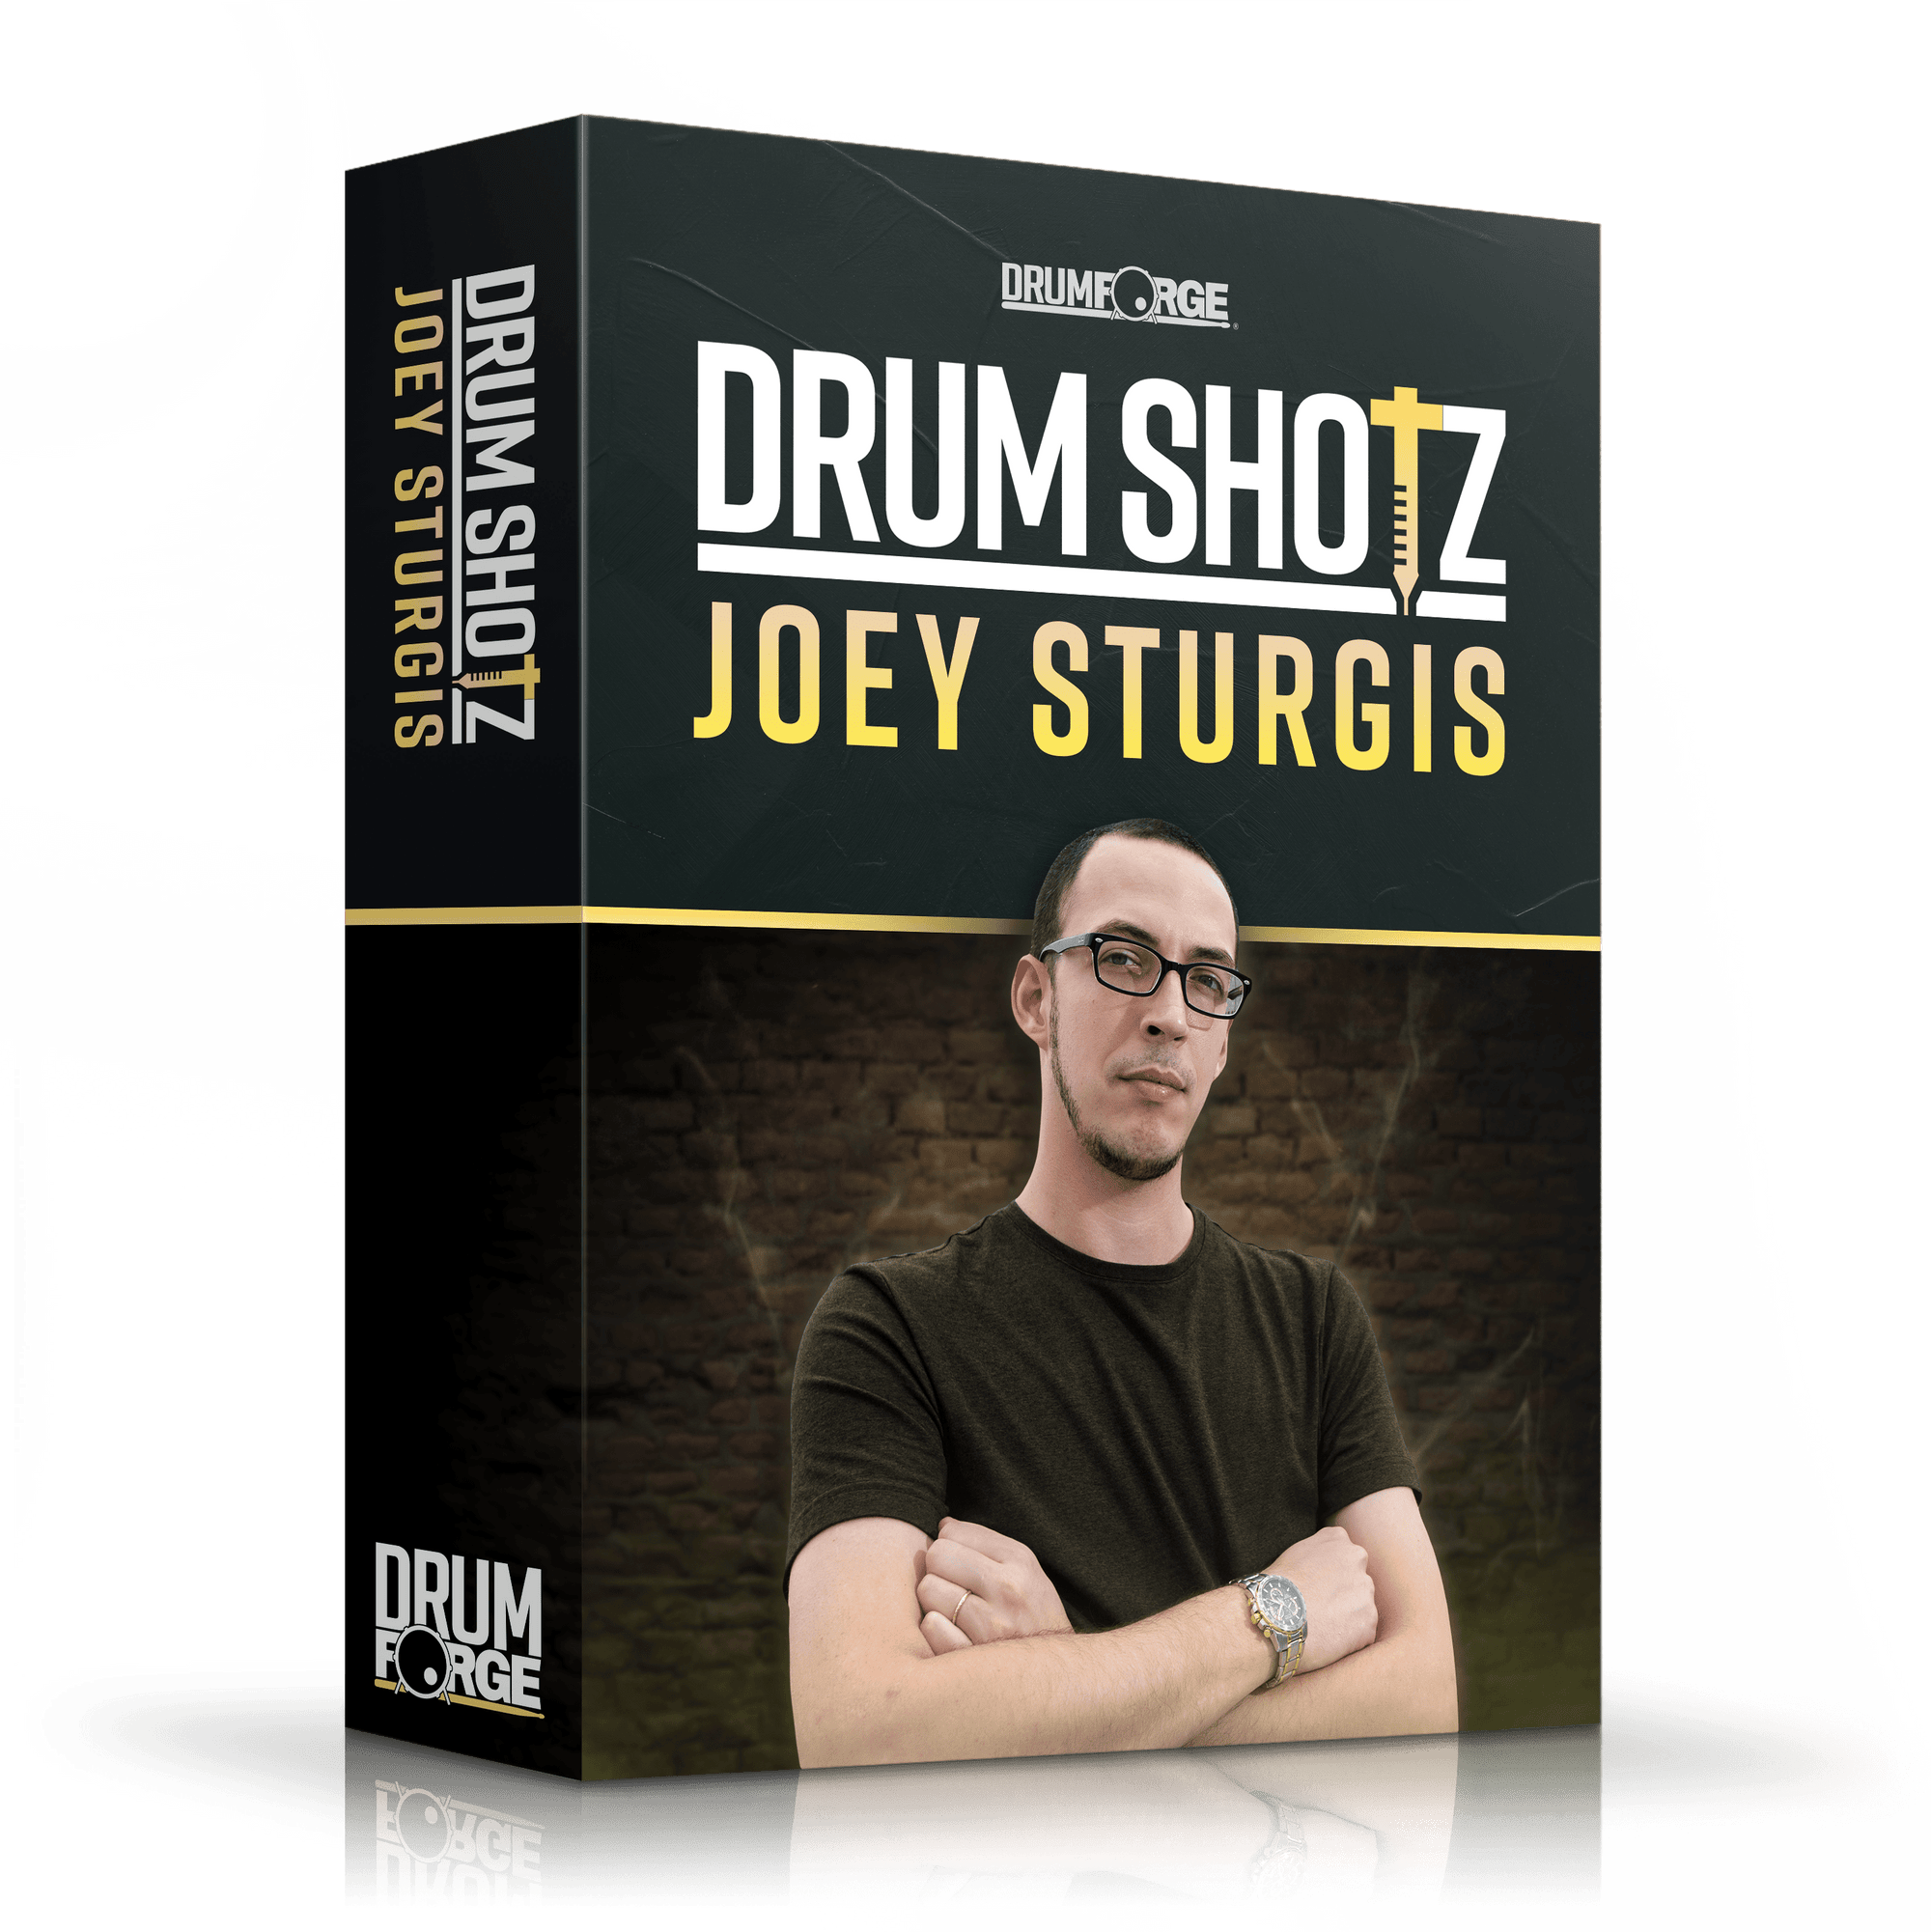 Drumshotz Joey Sturgis